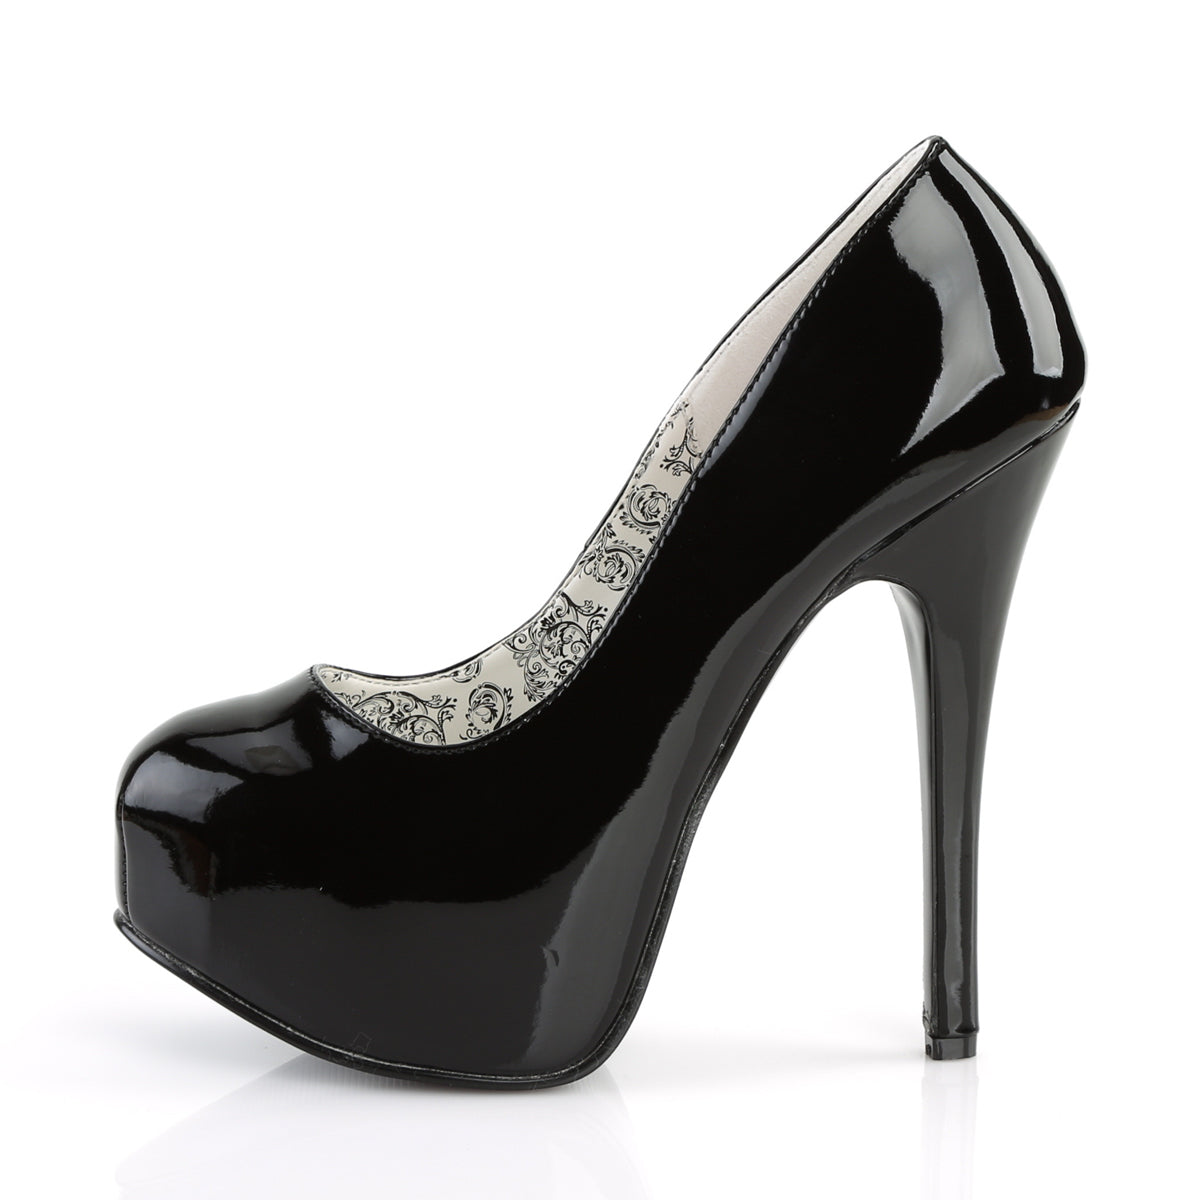 TEEZE-06 Bordello Heels Black Patent Shoes [Sexy Shoes]